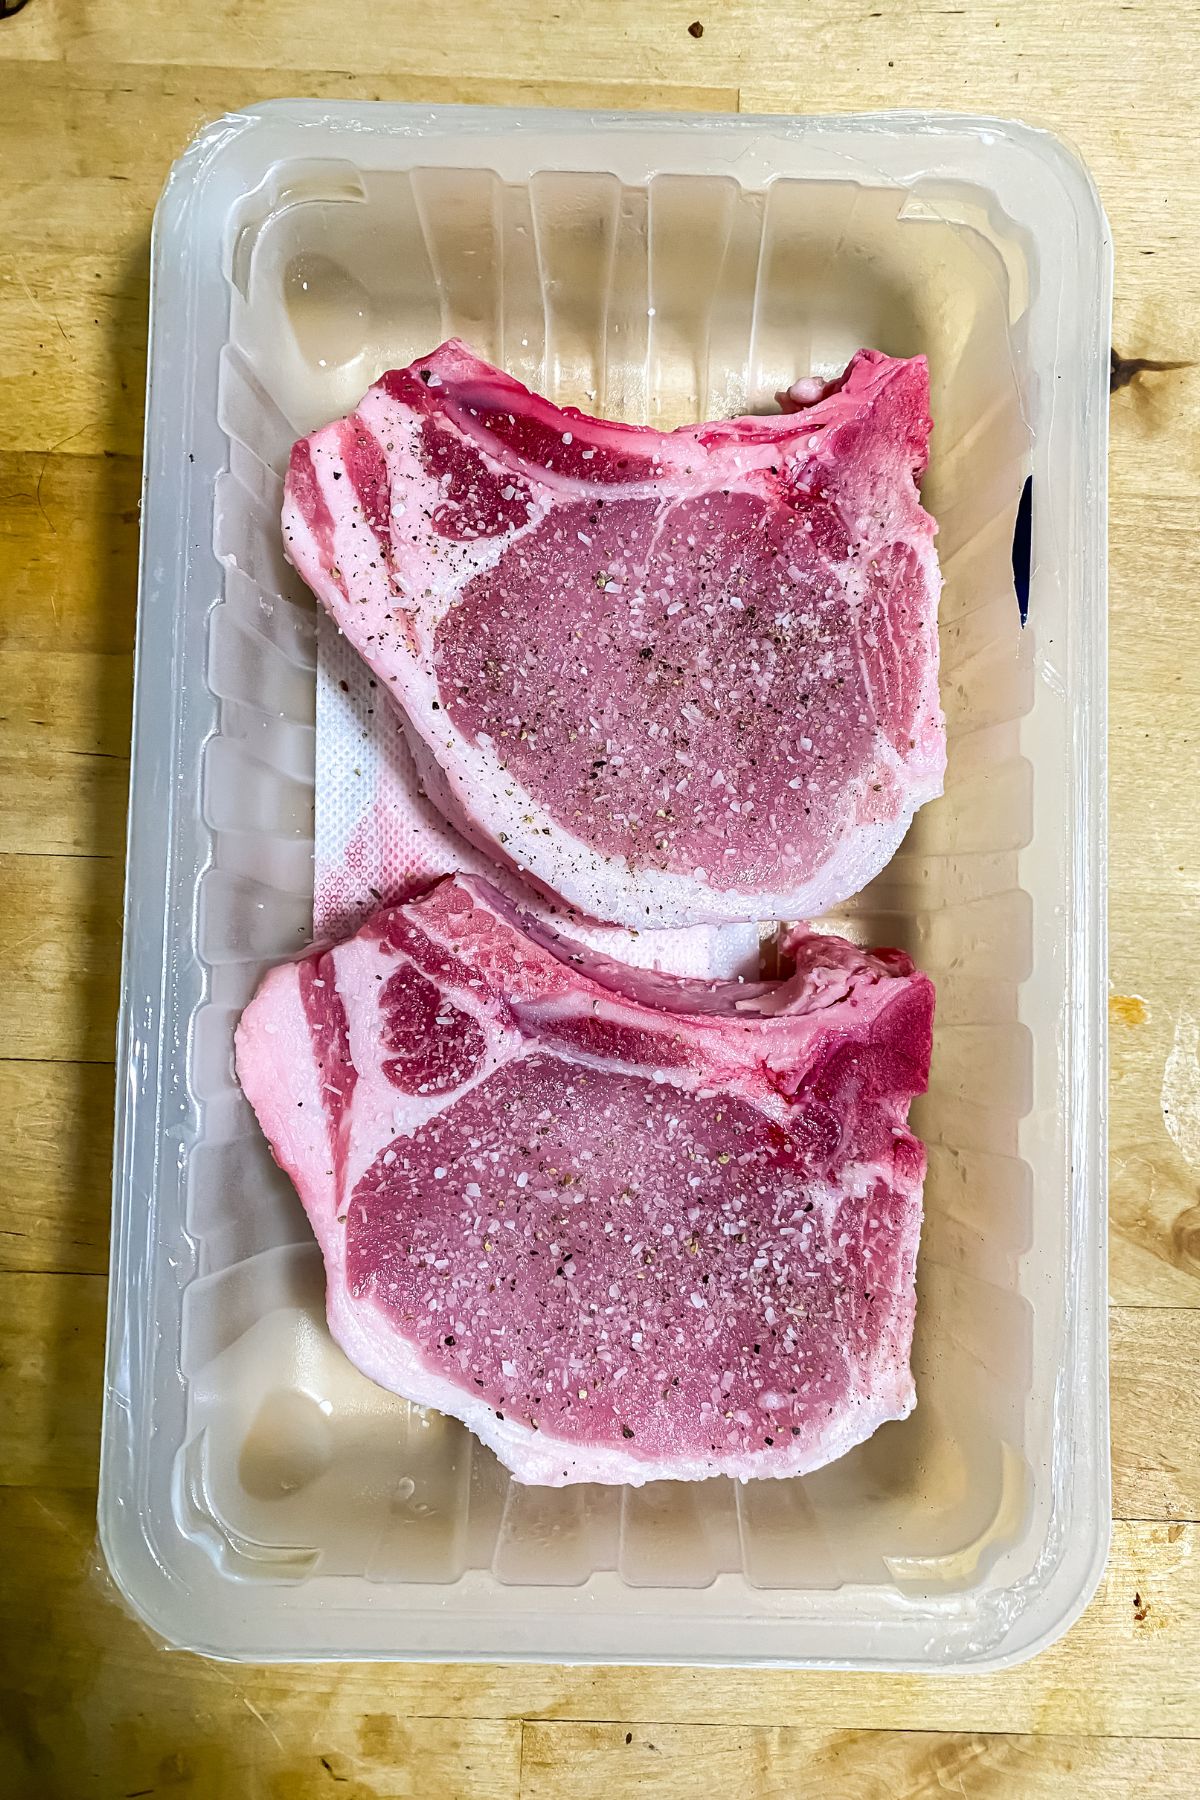 raw pork chops with seasoning on top